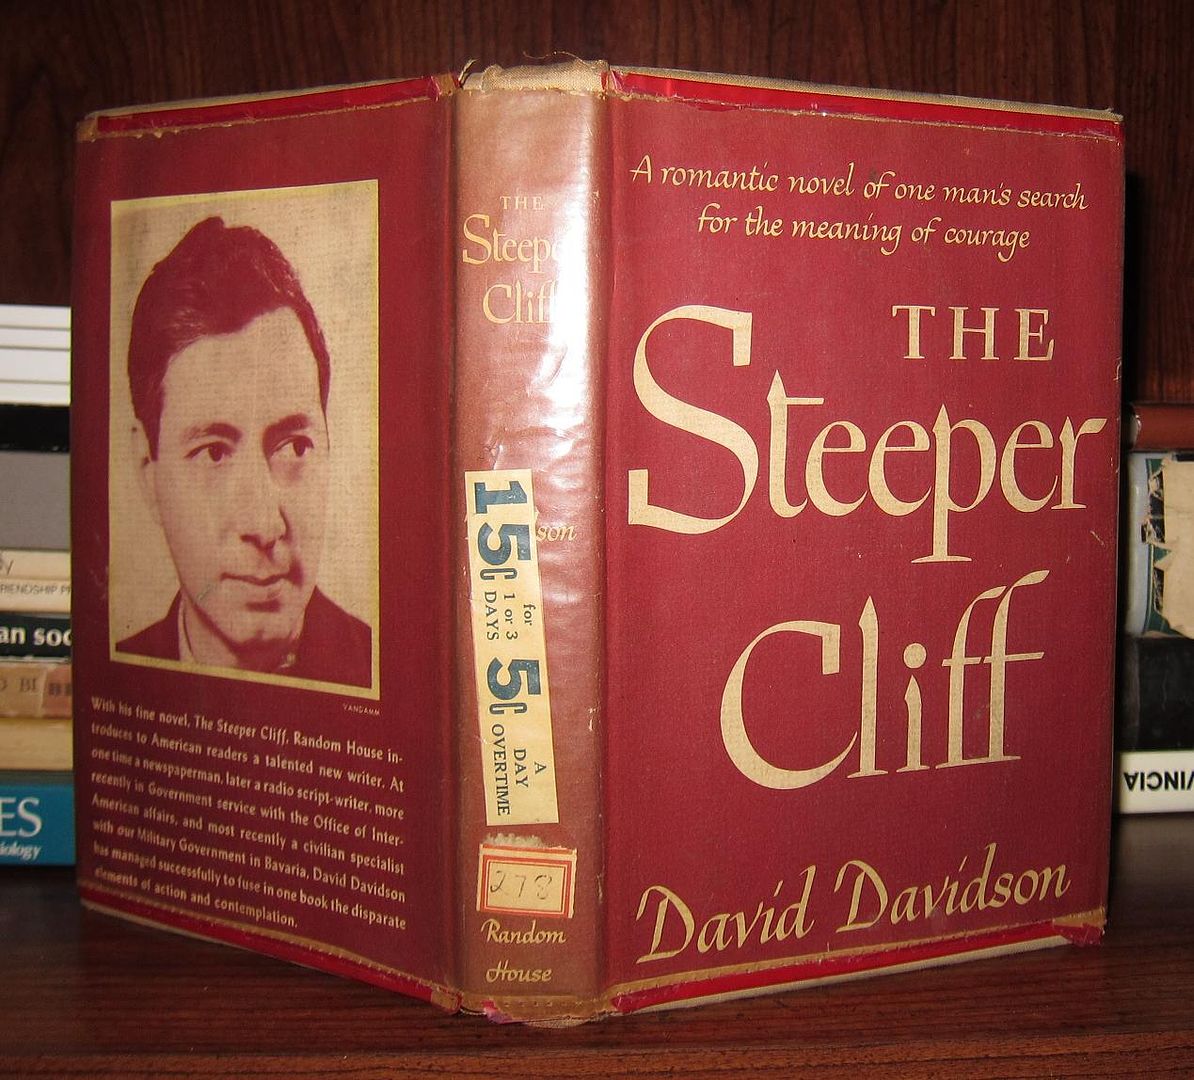 DAVIDSON, DAVID - The Steeper Cliff